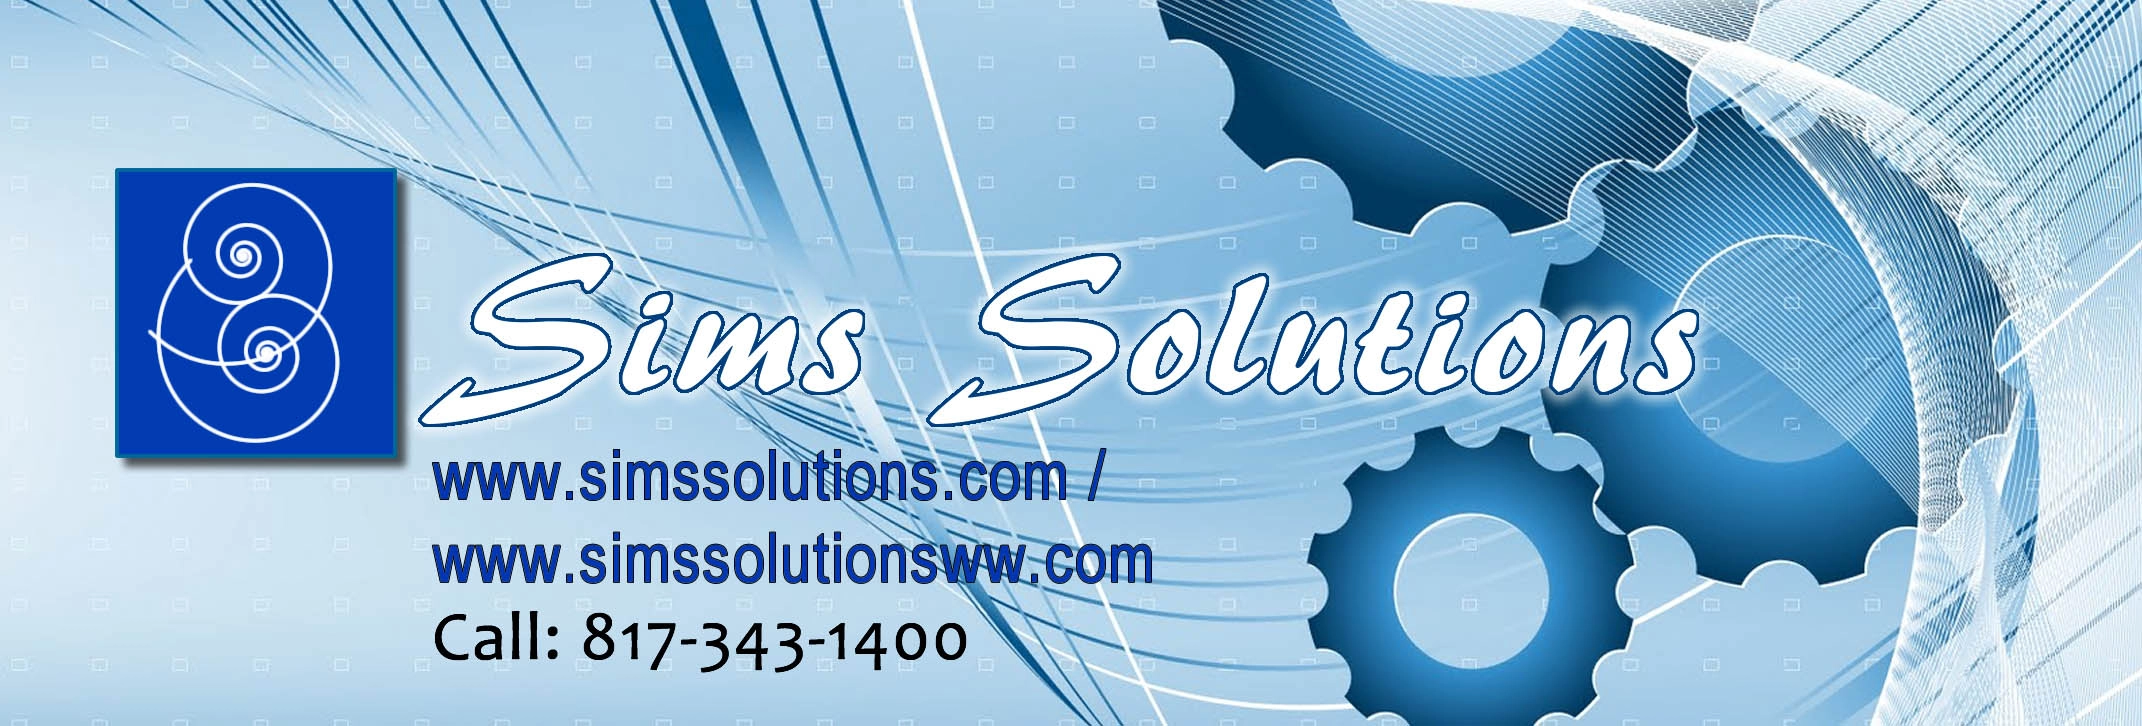 Sims Solutions Custom Web Design / www.simssolutions.com